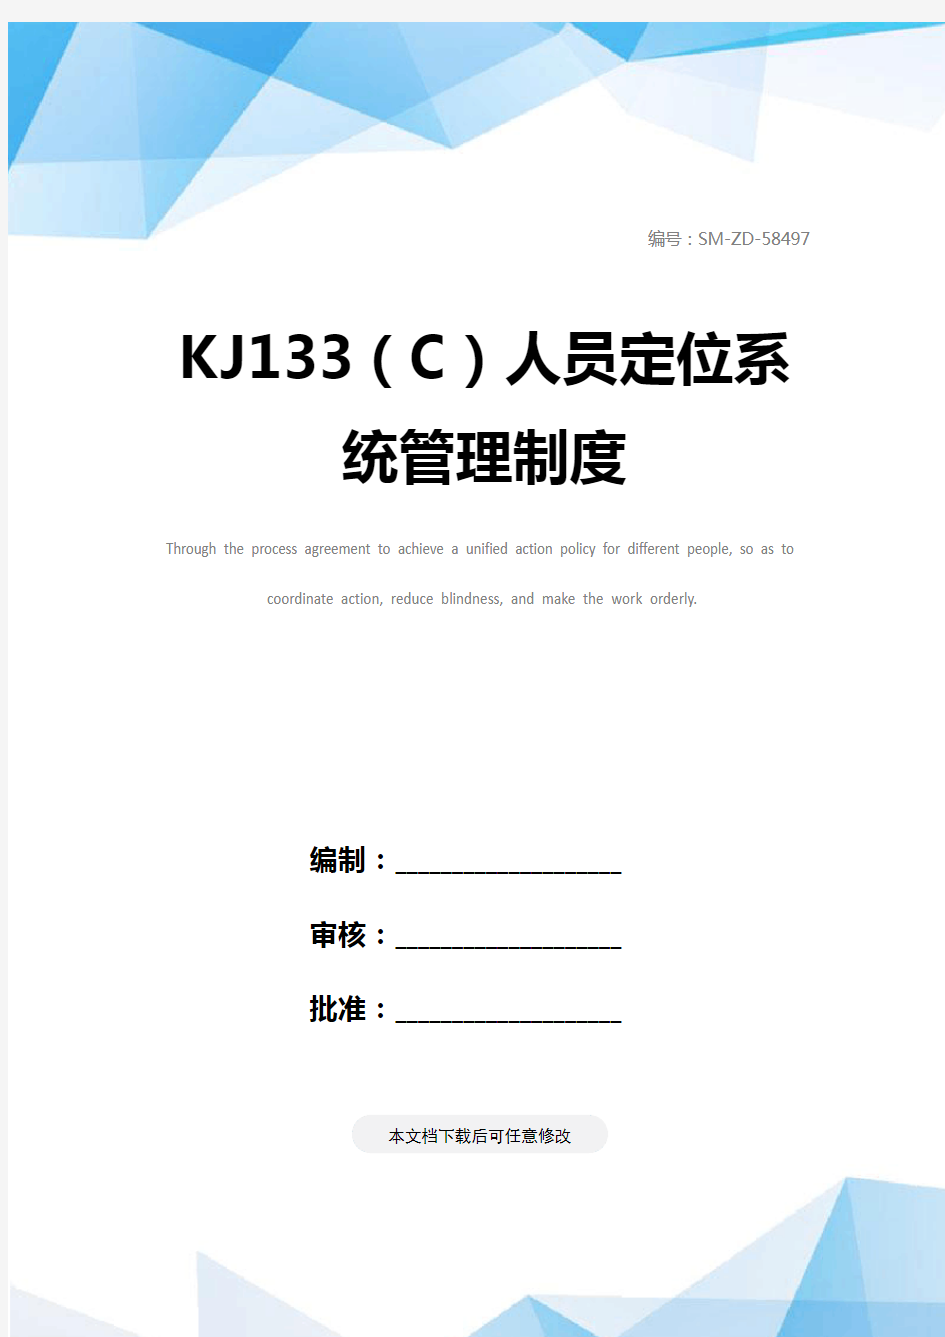 KJ133(C)人员定位系统管理制度